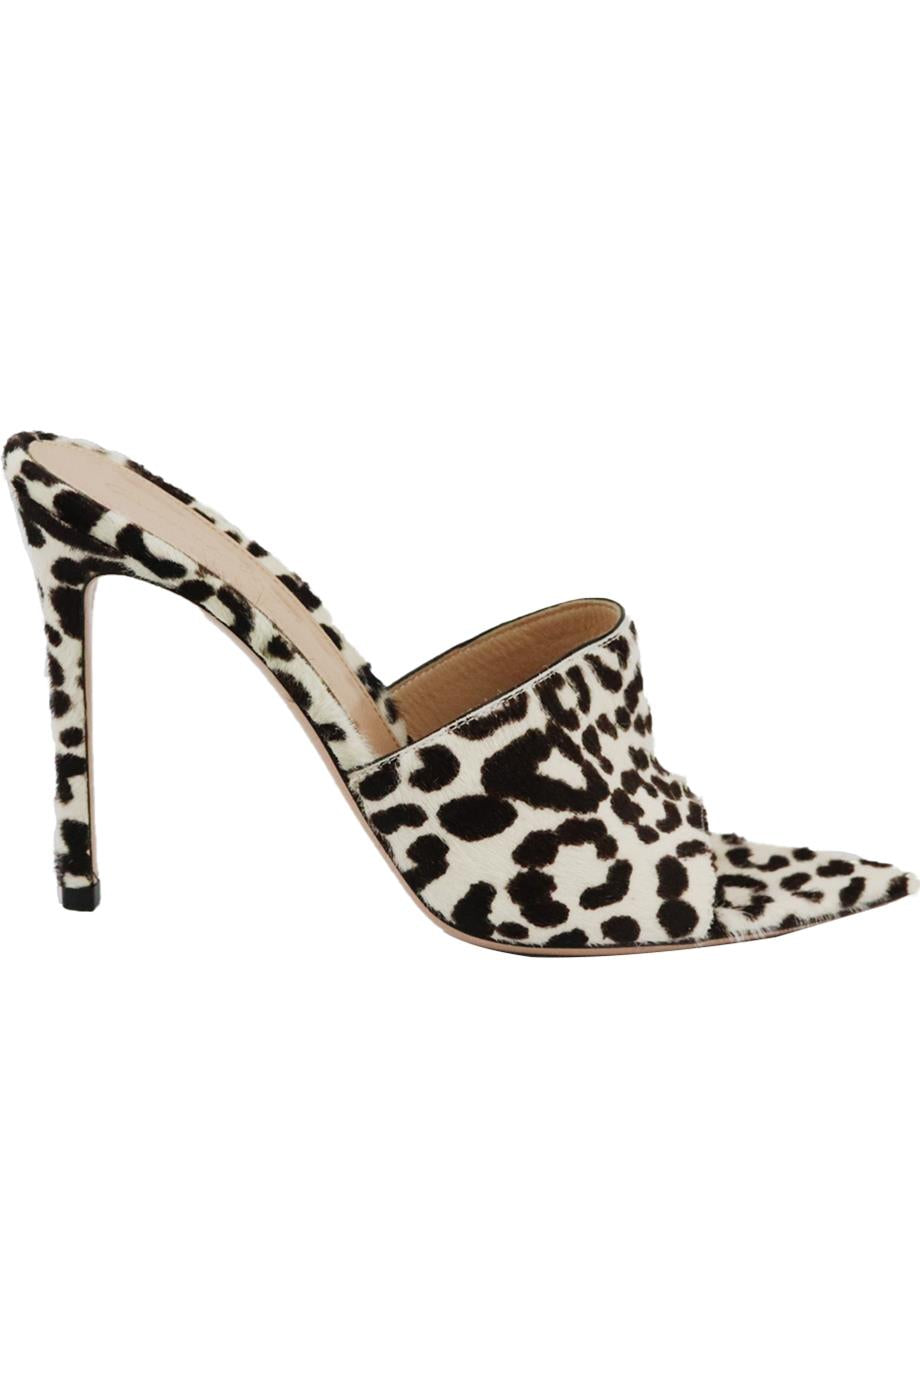 Lotus Tarleton Leopard Print Shoes - Ladies from Crichton Shoes UK